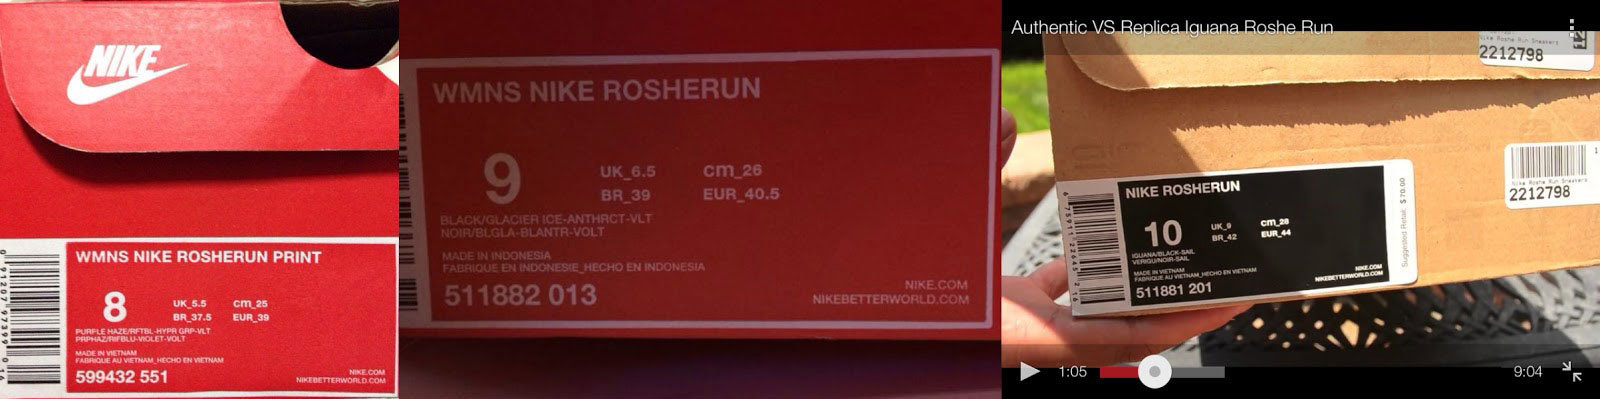 Інформація на коробці фірмових кросівок Nike Roshe One